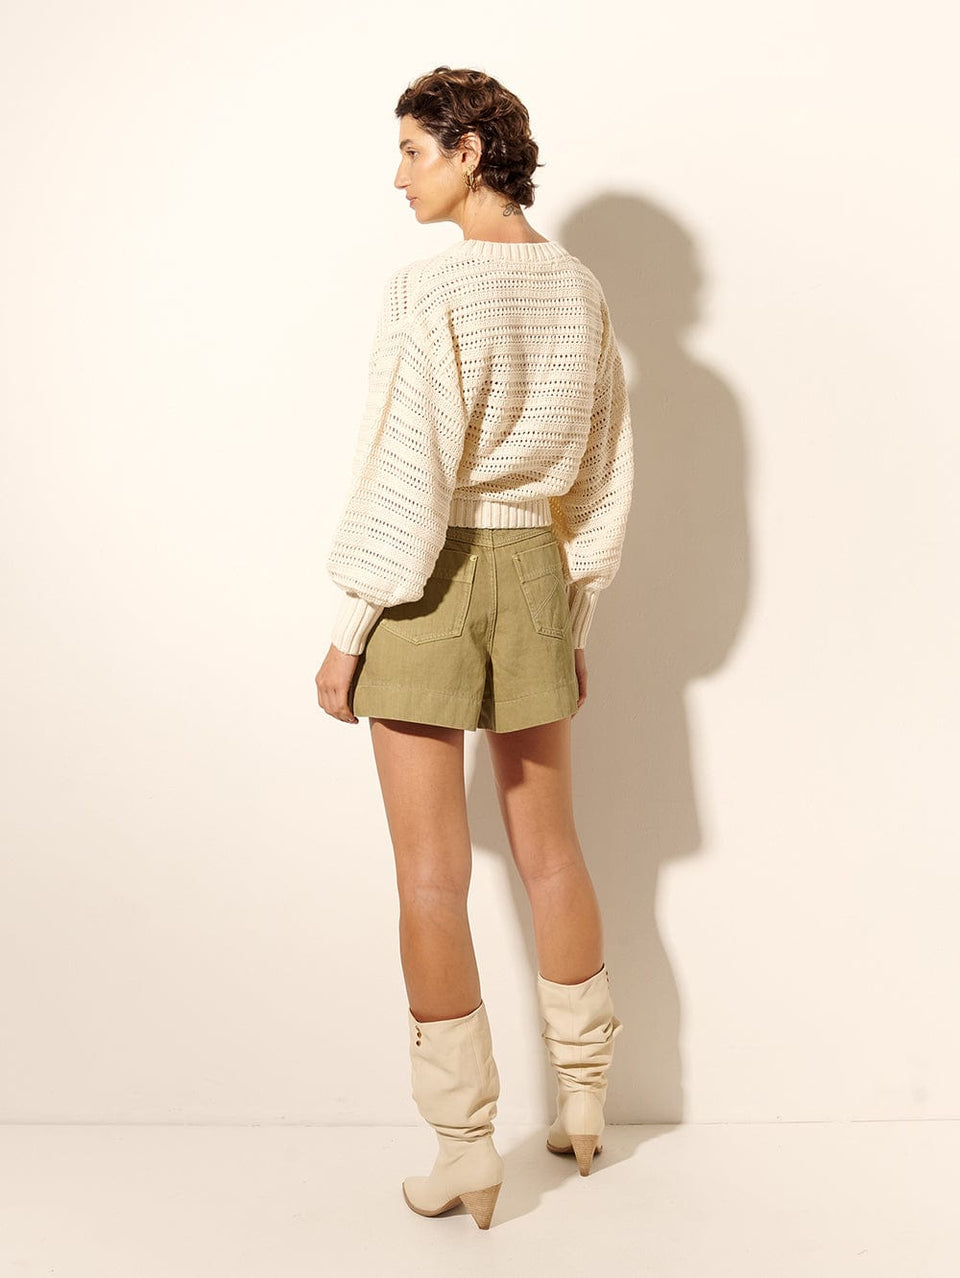 Pepe Knit Sweater Cream KIVARI | Model wears cream knit sweater back view